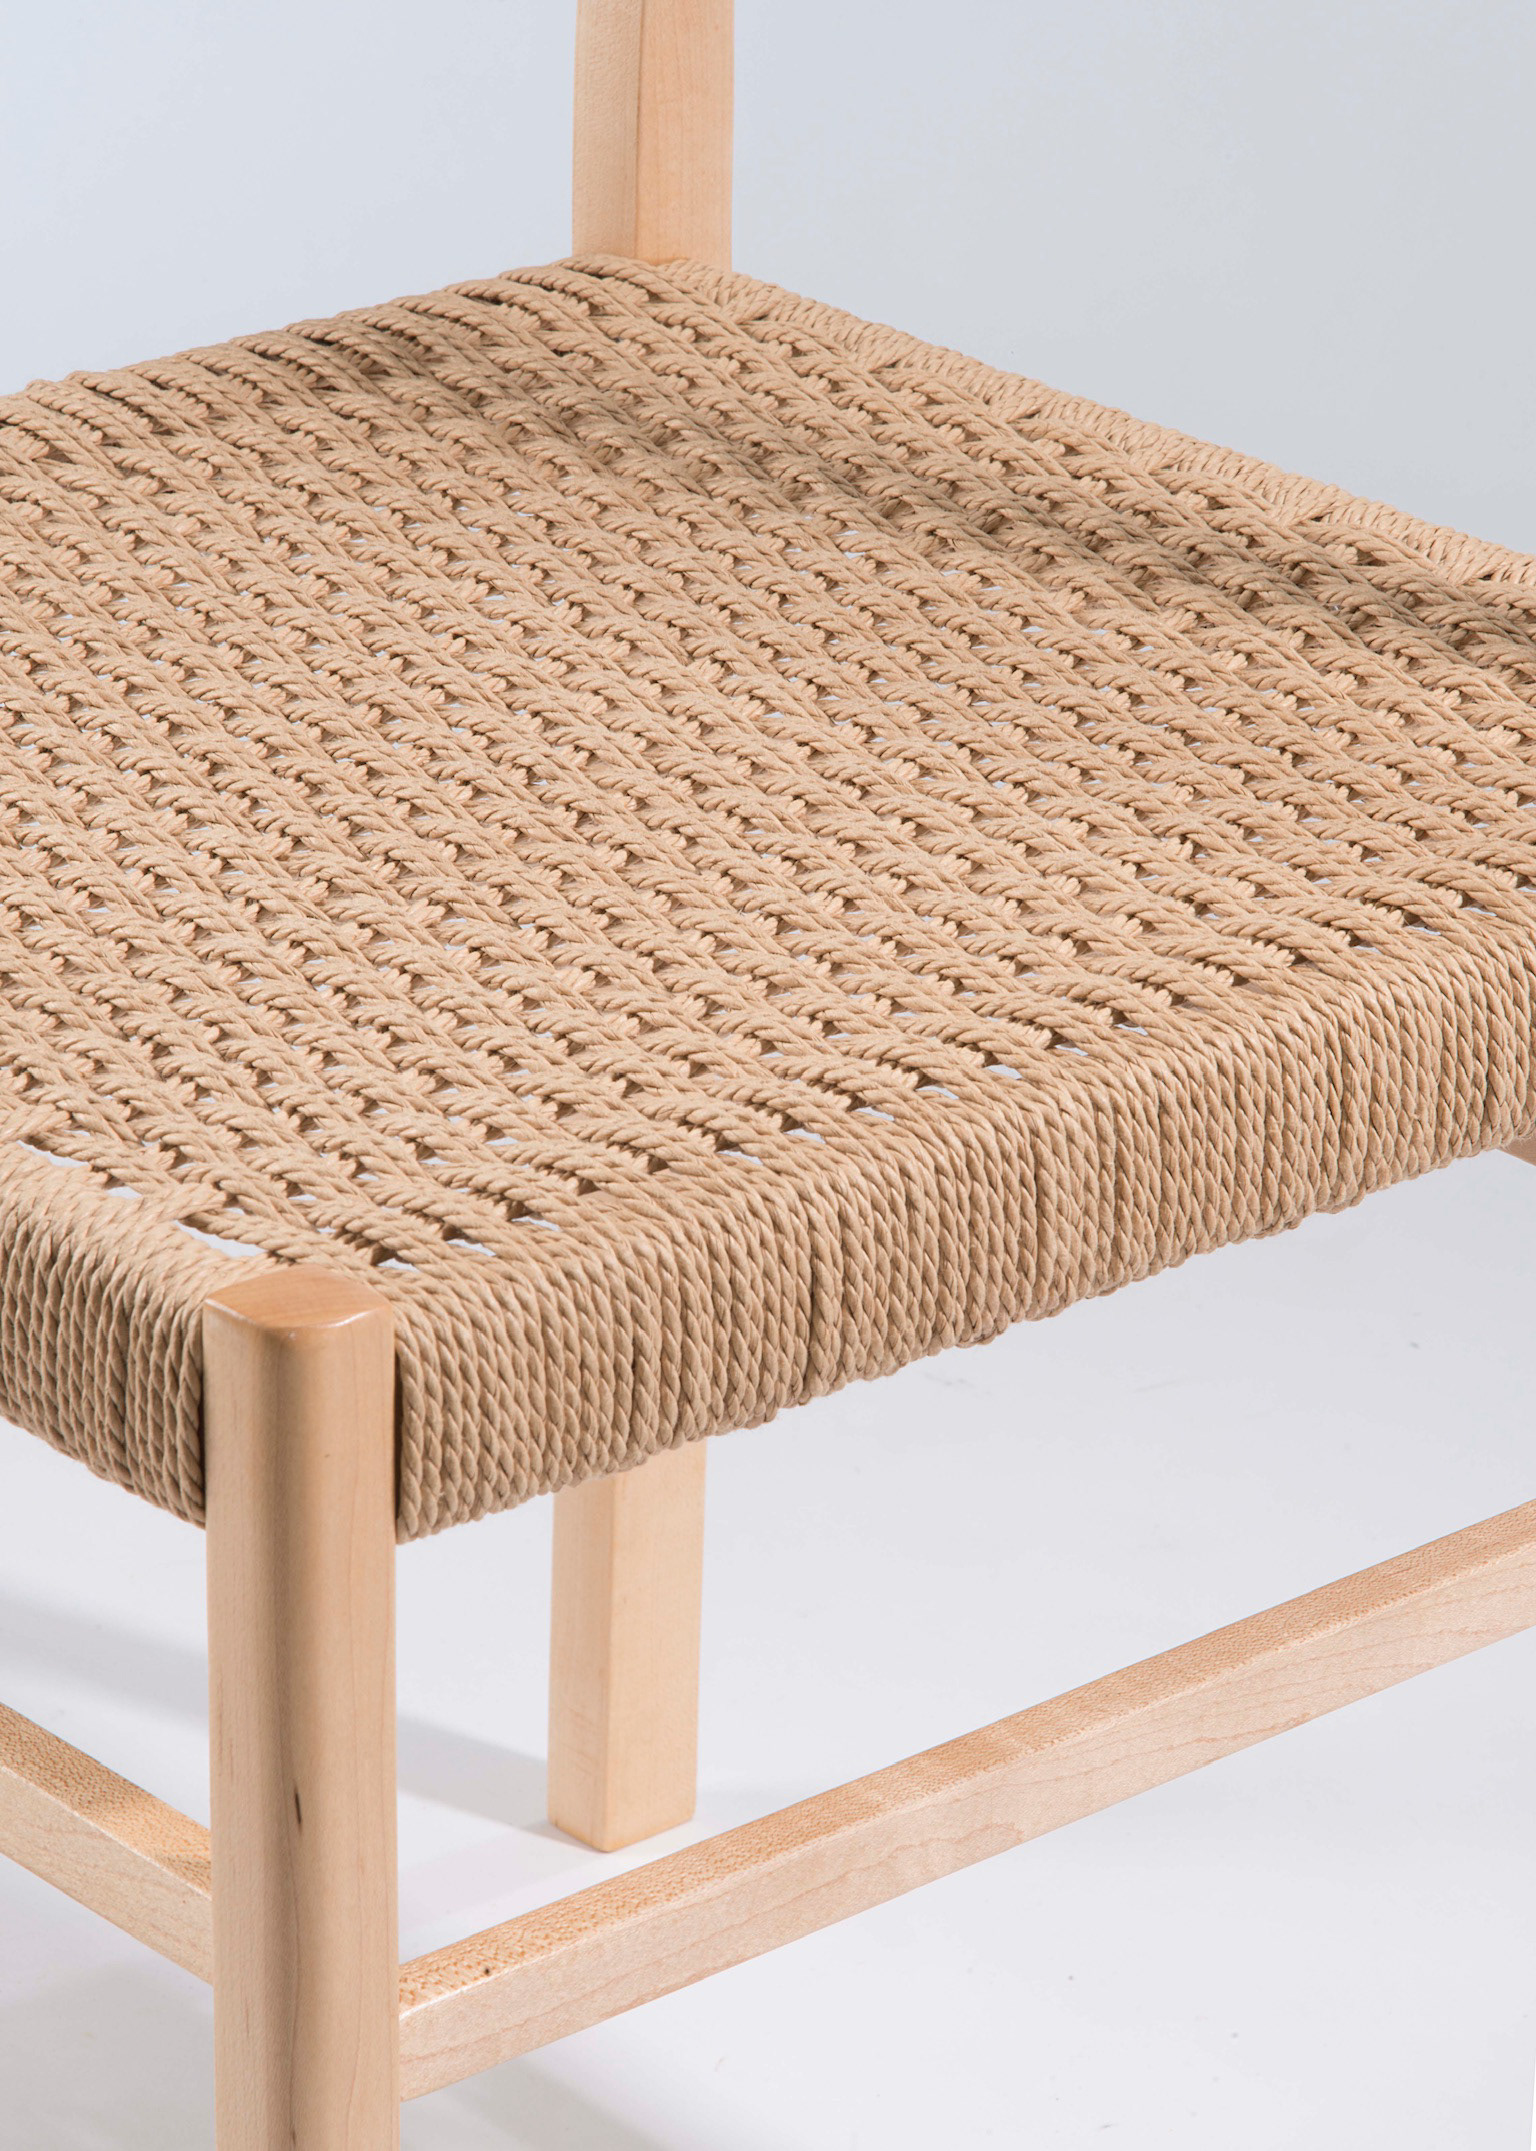 Danish Cord Weaving: Footstool